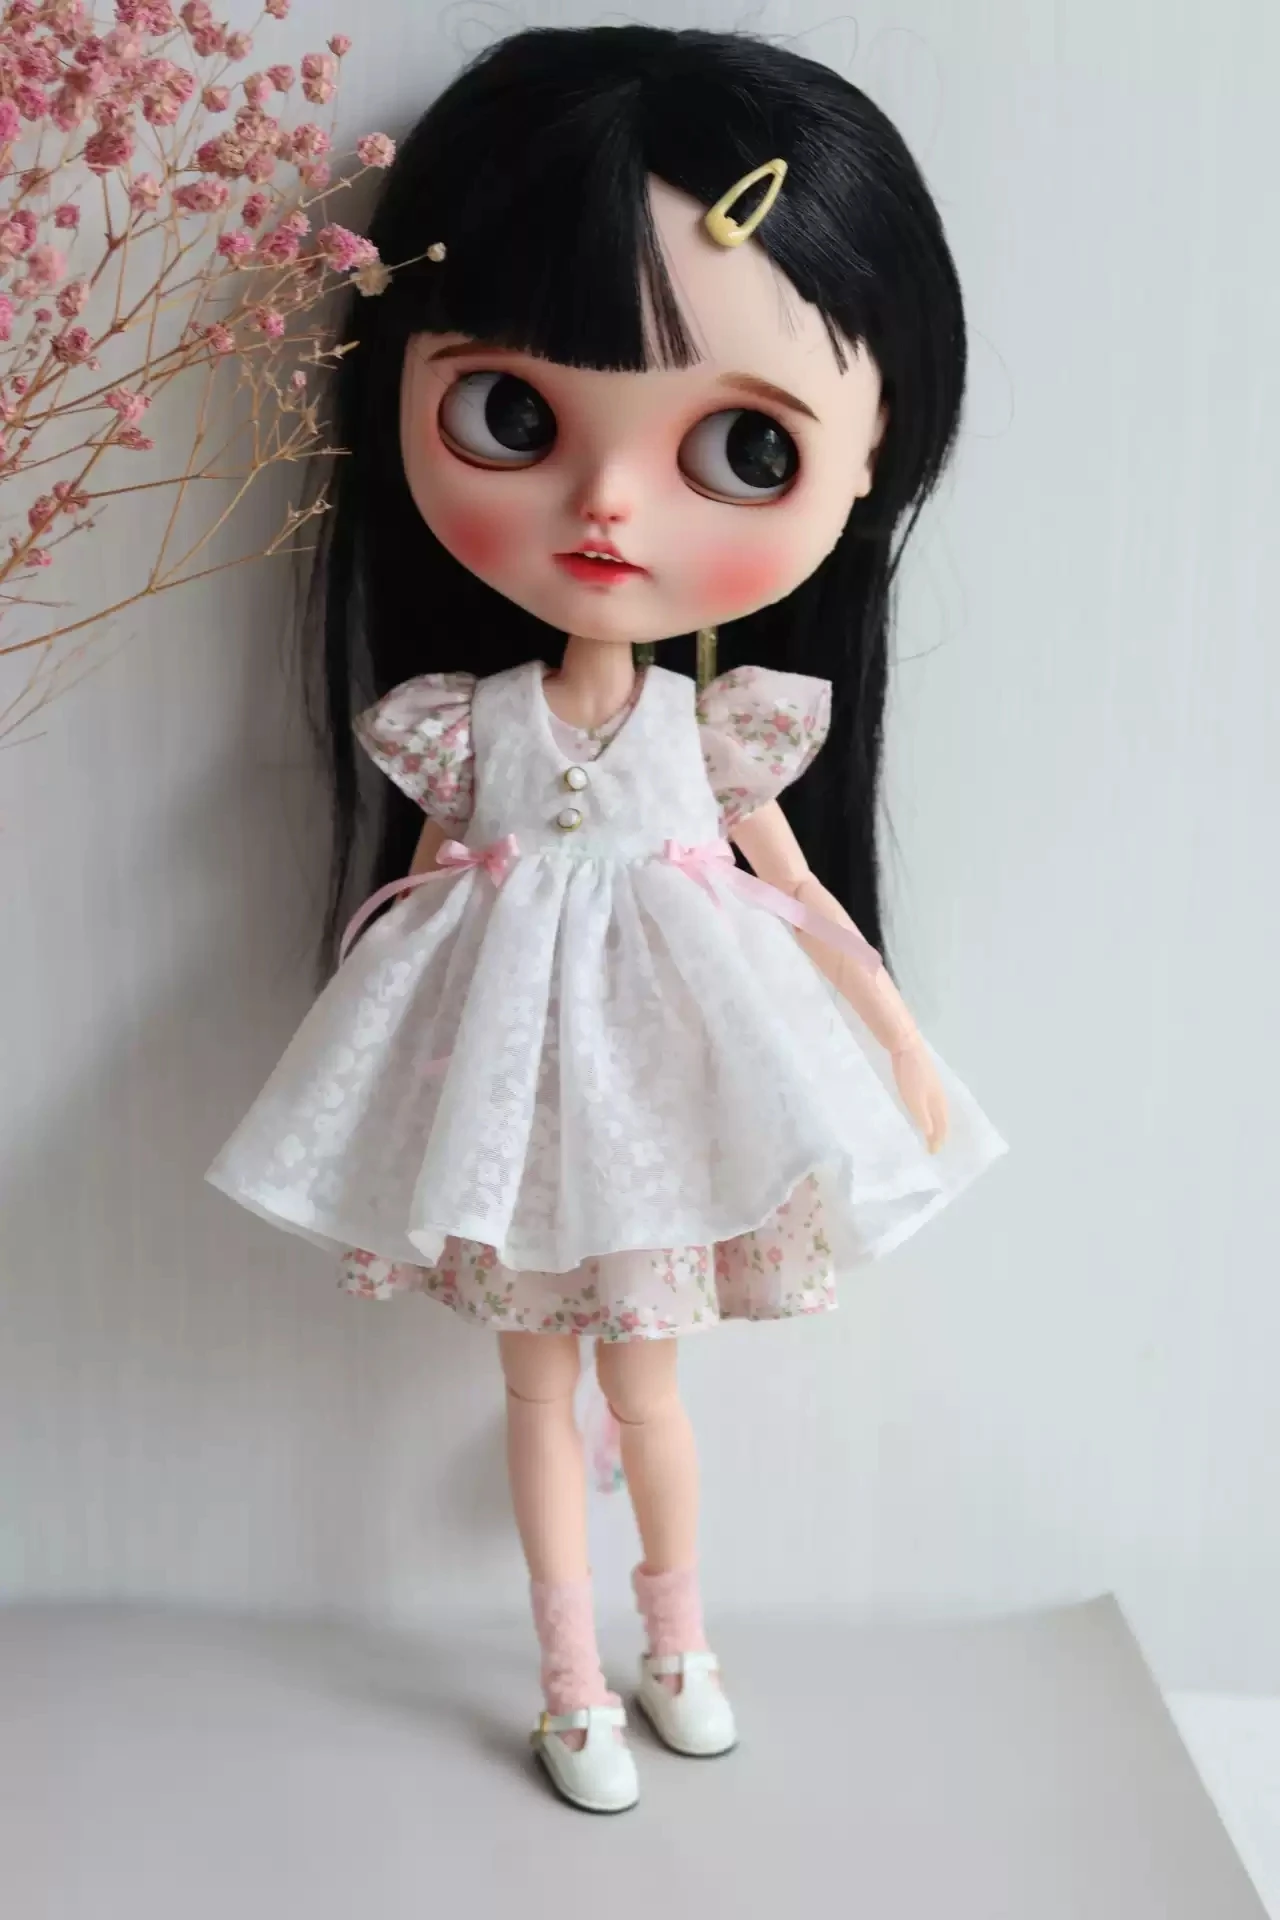 

Dula Doll Clothes Dress Floral dress skirt Blythe Qbaby ob24 ob22 ob11 Azone Licca ICY JerryB 1/6 Bjd Doll Accessories